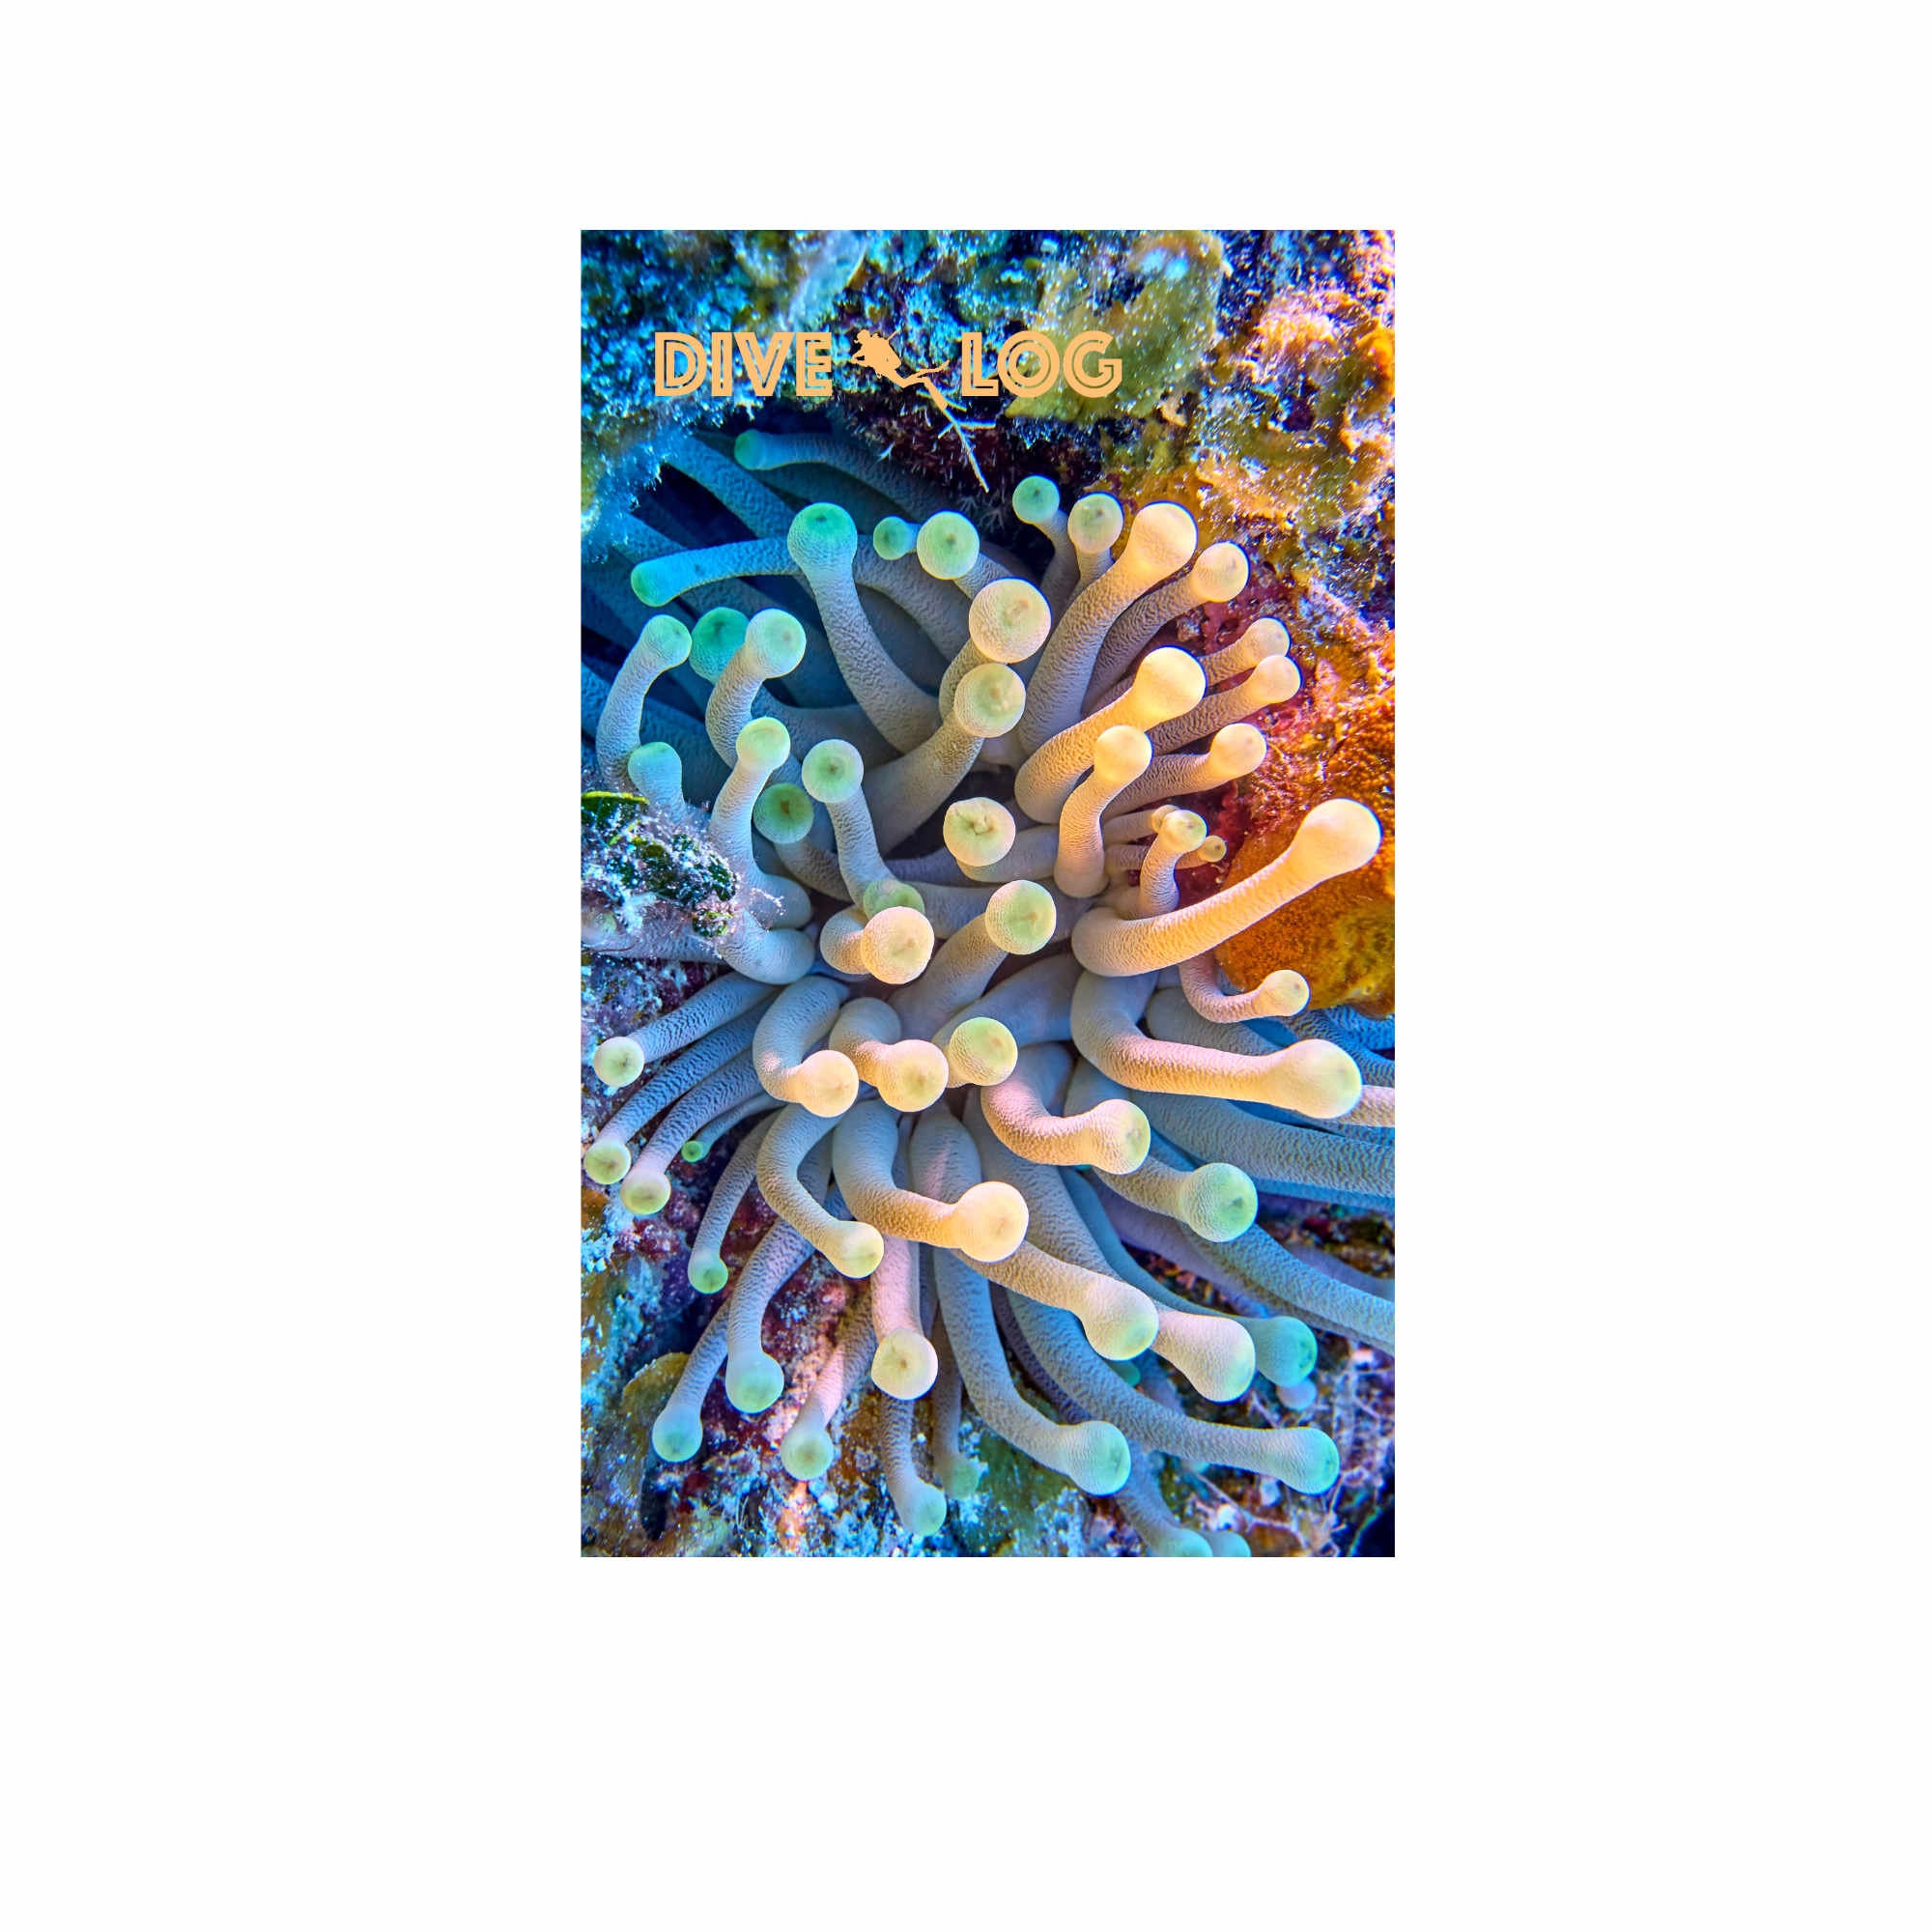 Anemone Scuba Dive Log Book Diving Journal 